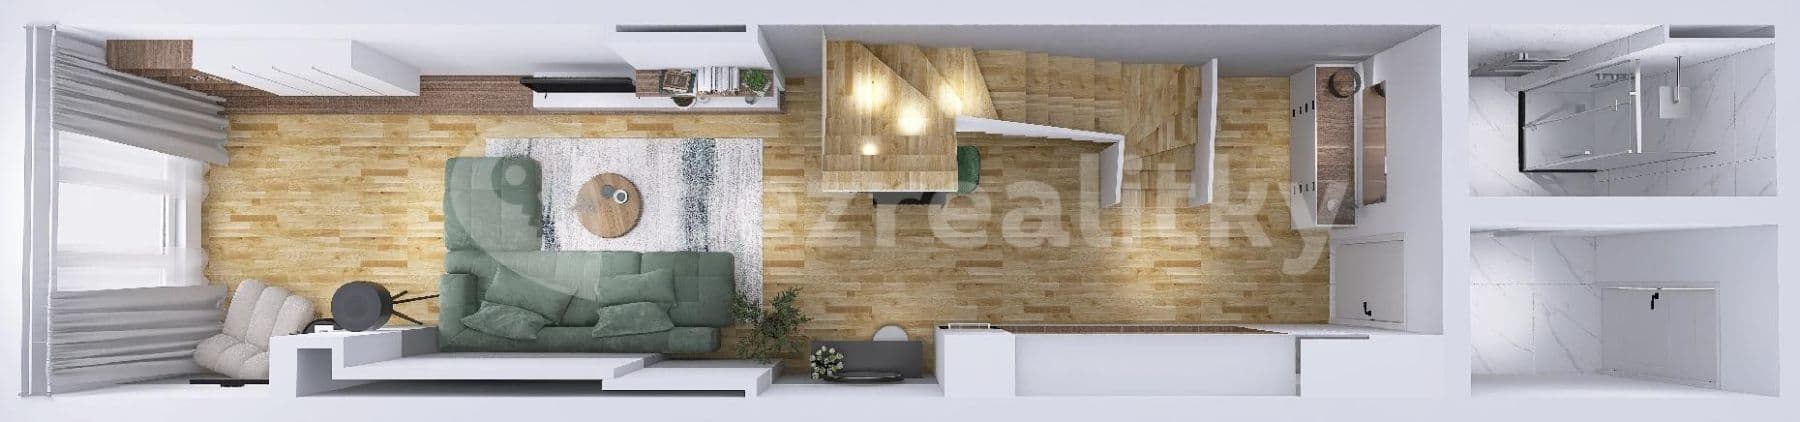 1 bedroom with open-plan kitchen flat for sale, 74 m², Ruská, Prague, Prague